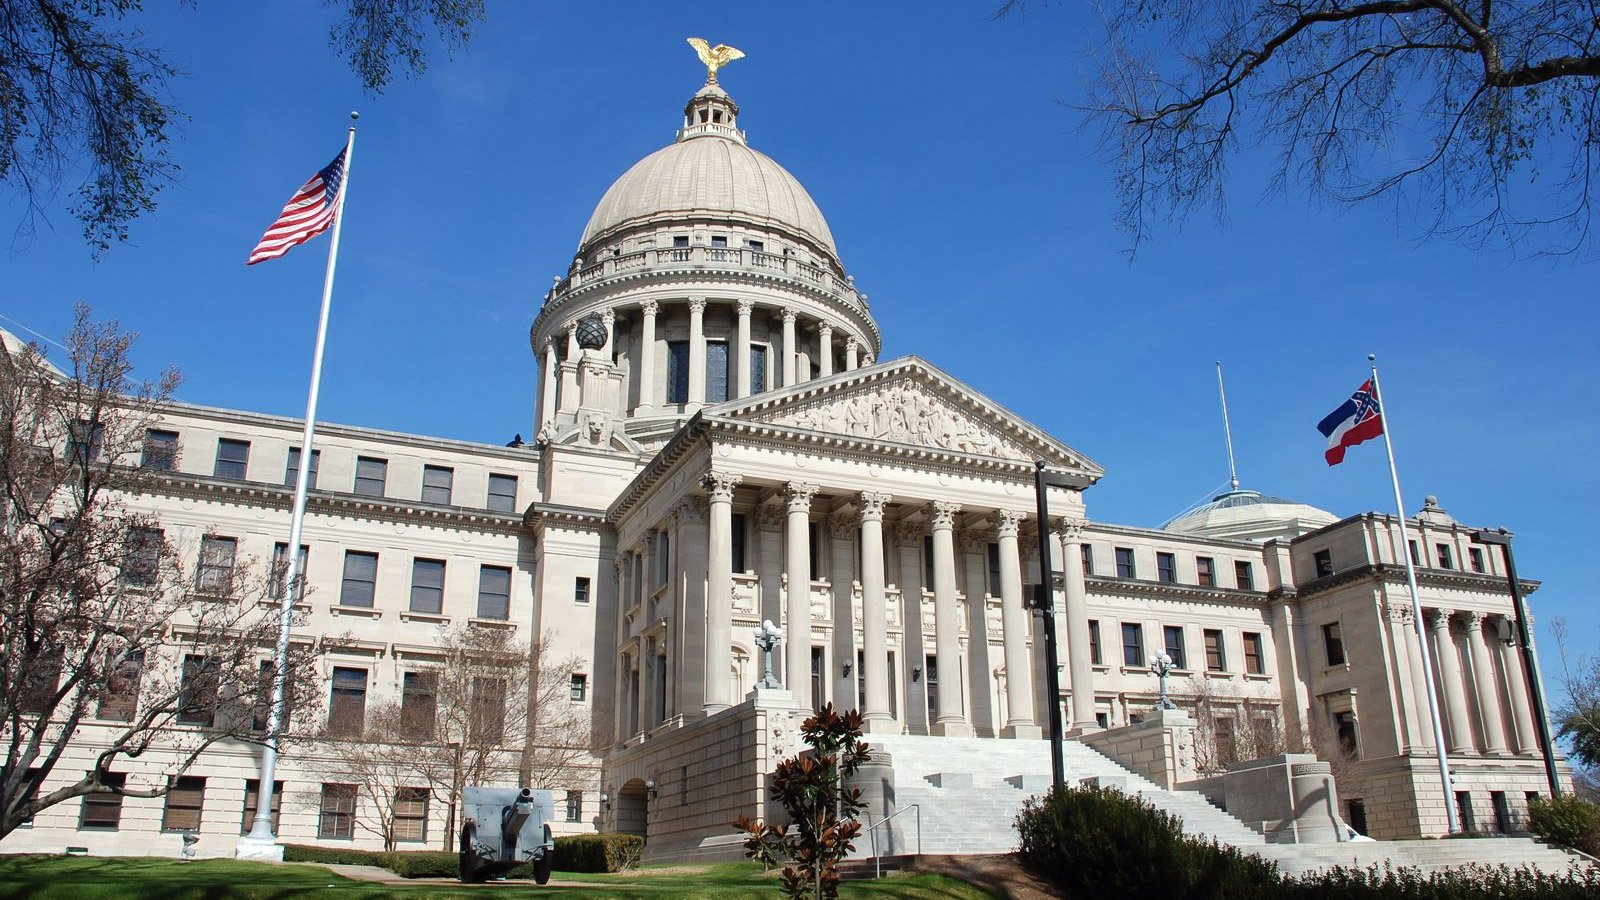 Mississippi: Tidelands Bill setting the stage for casino development regulations receives senate approval